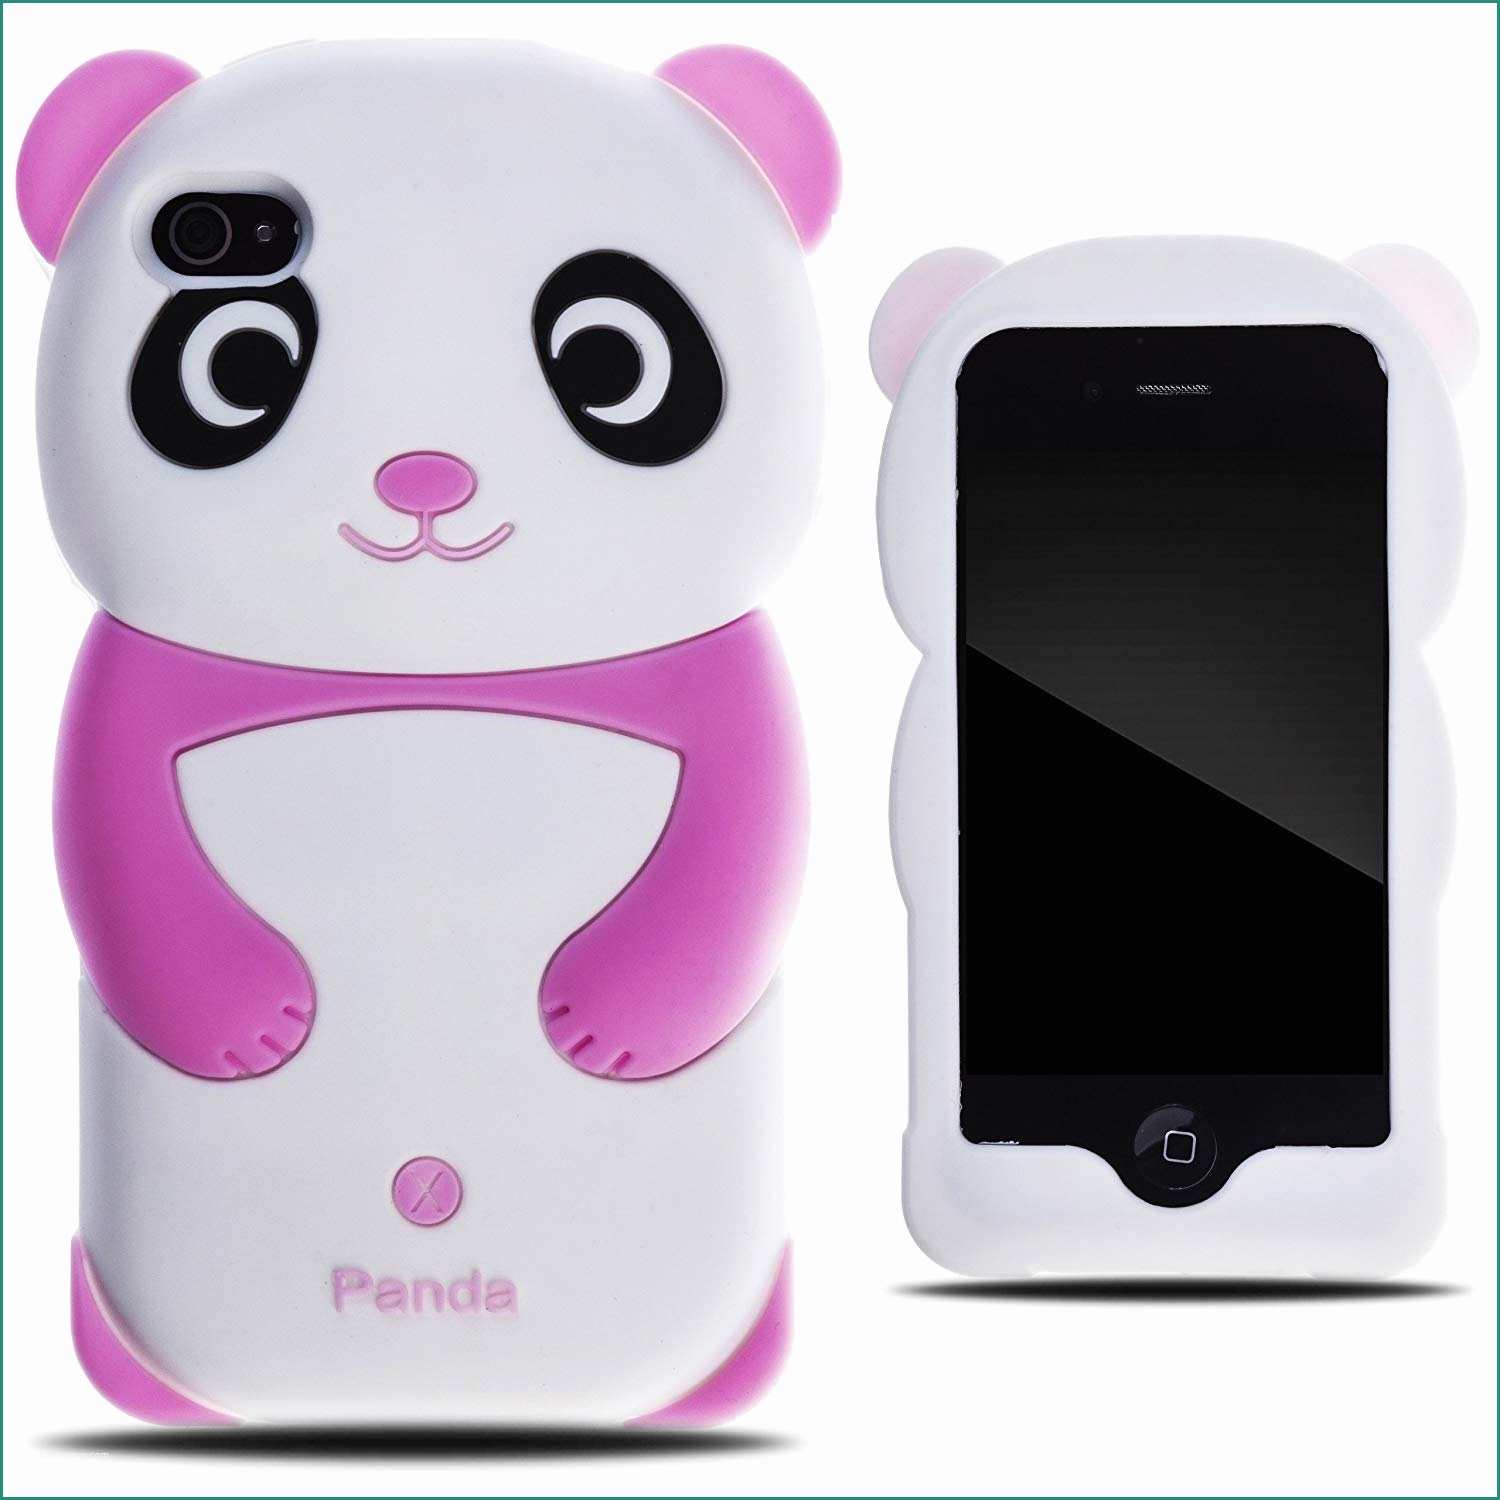 Marion Materassi Singoli E Gad Panda Casemate Creatures Xing Panda Case Cover Black for